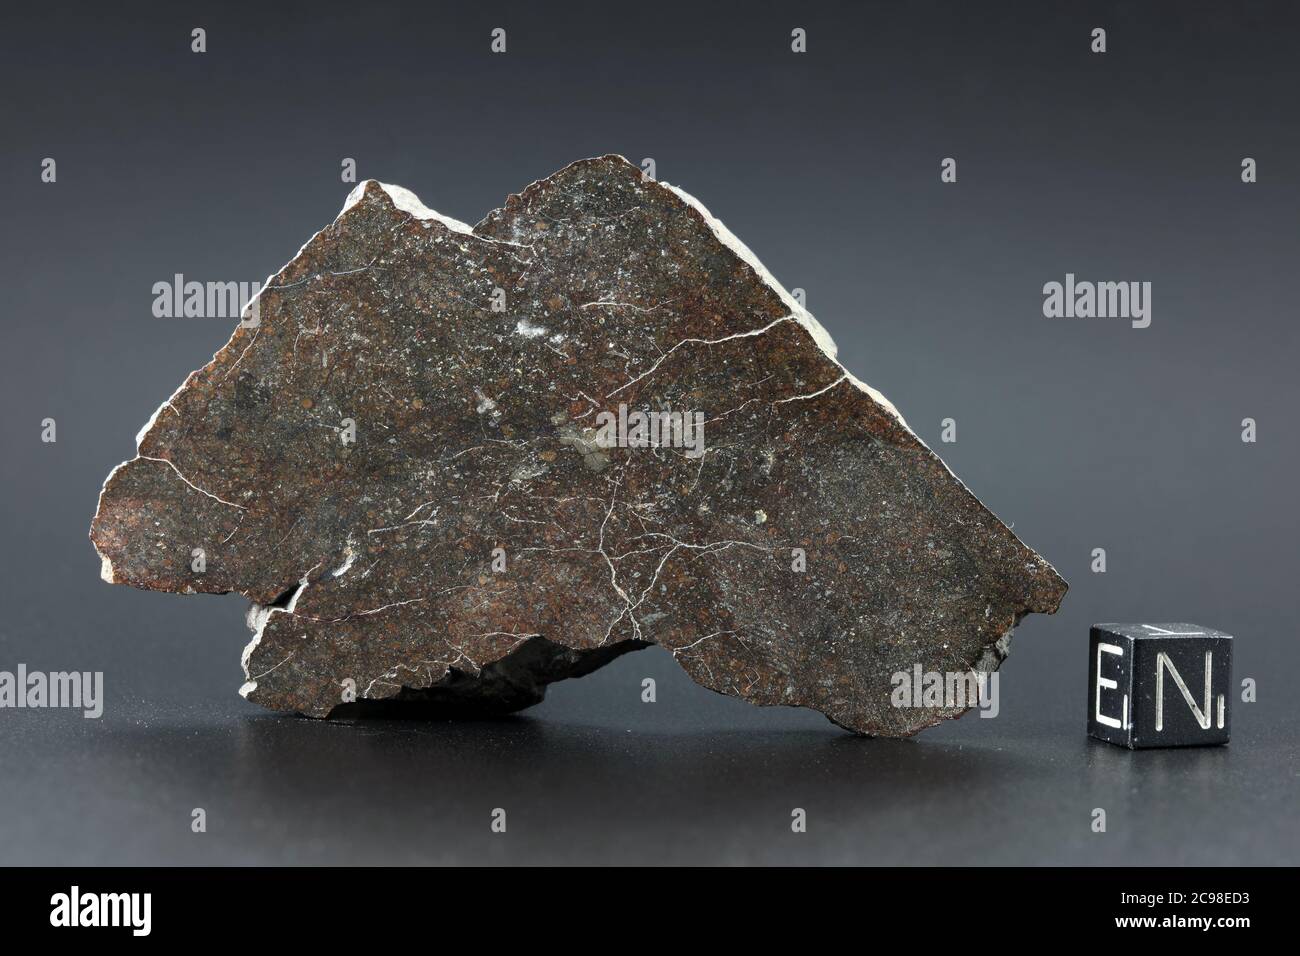 POLUJAMKI  - Found 1971, Mikhailovsky District, Altay Region, URSS. Chondrite H4. Total mass 13.5 kg. Stock Photo